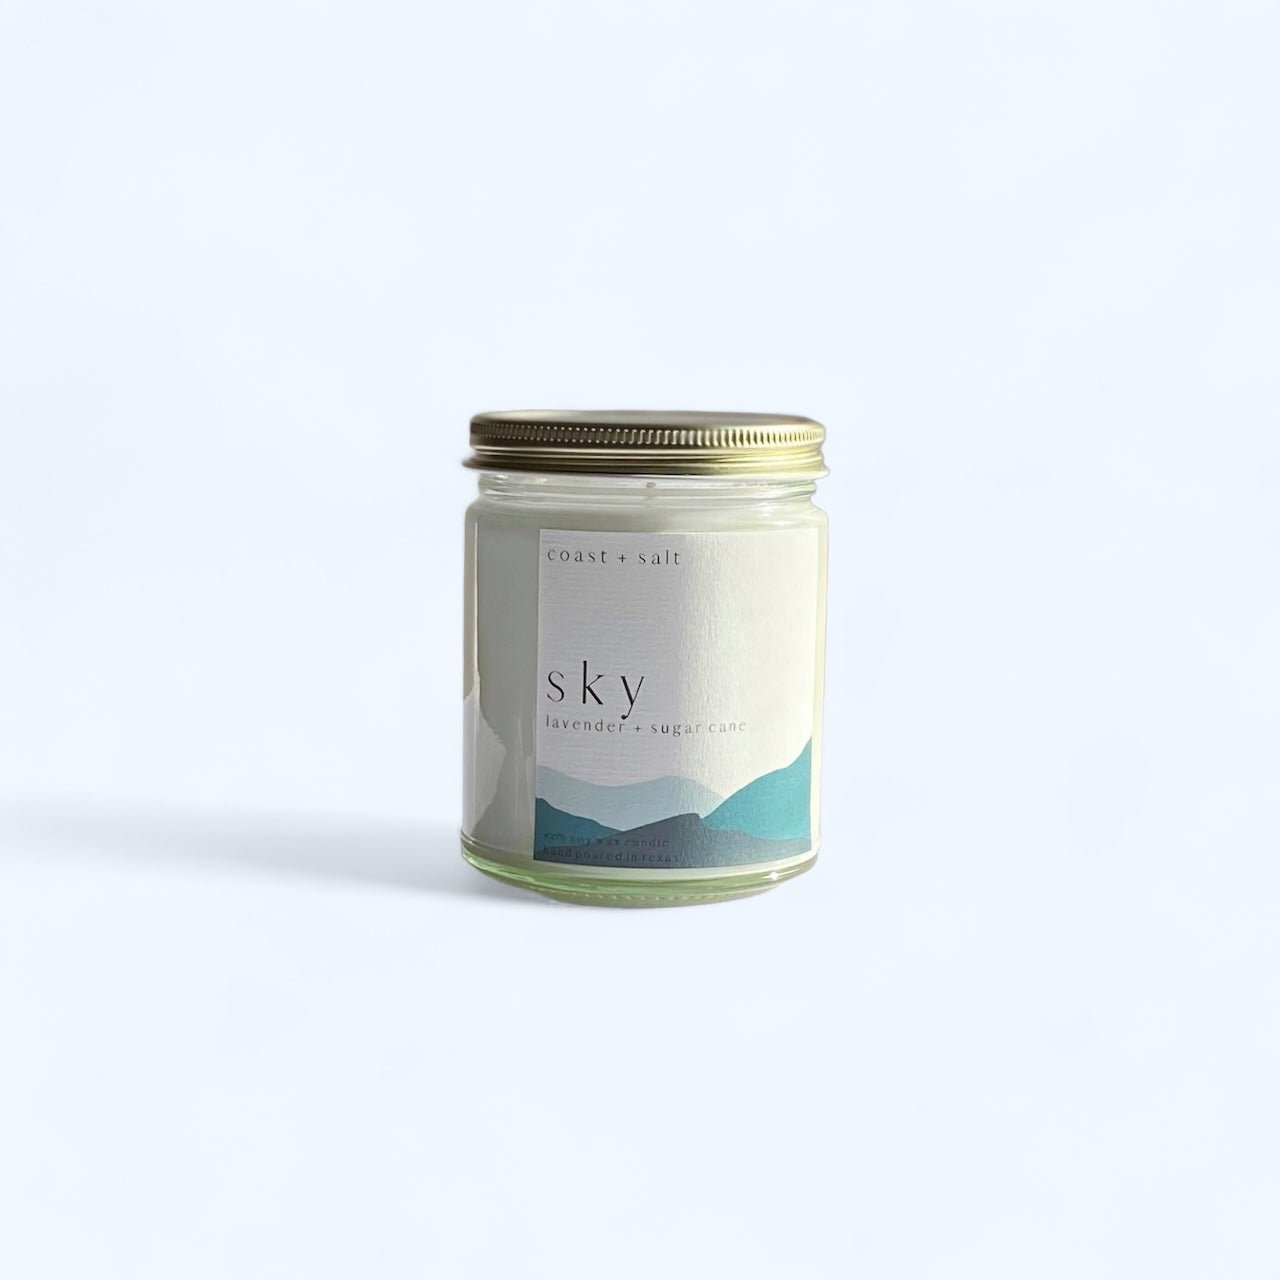 Sky | Lavender + Sugar Cane Single Wick Candle